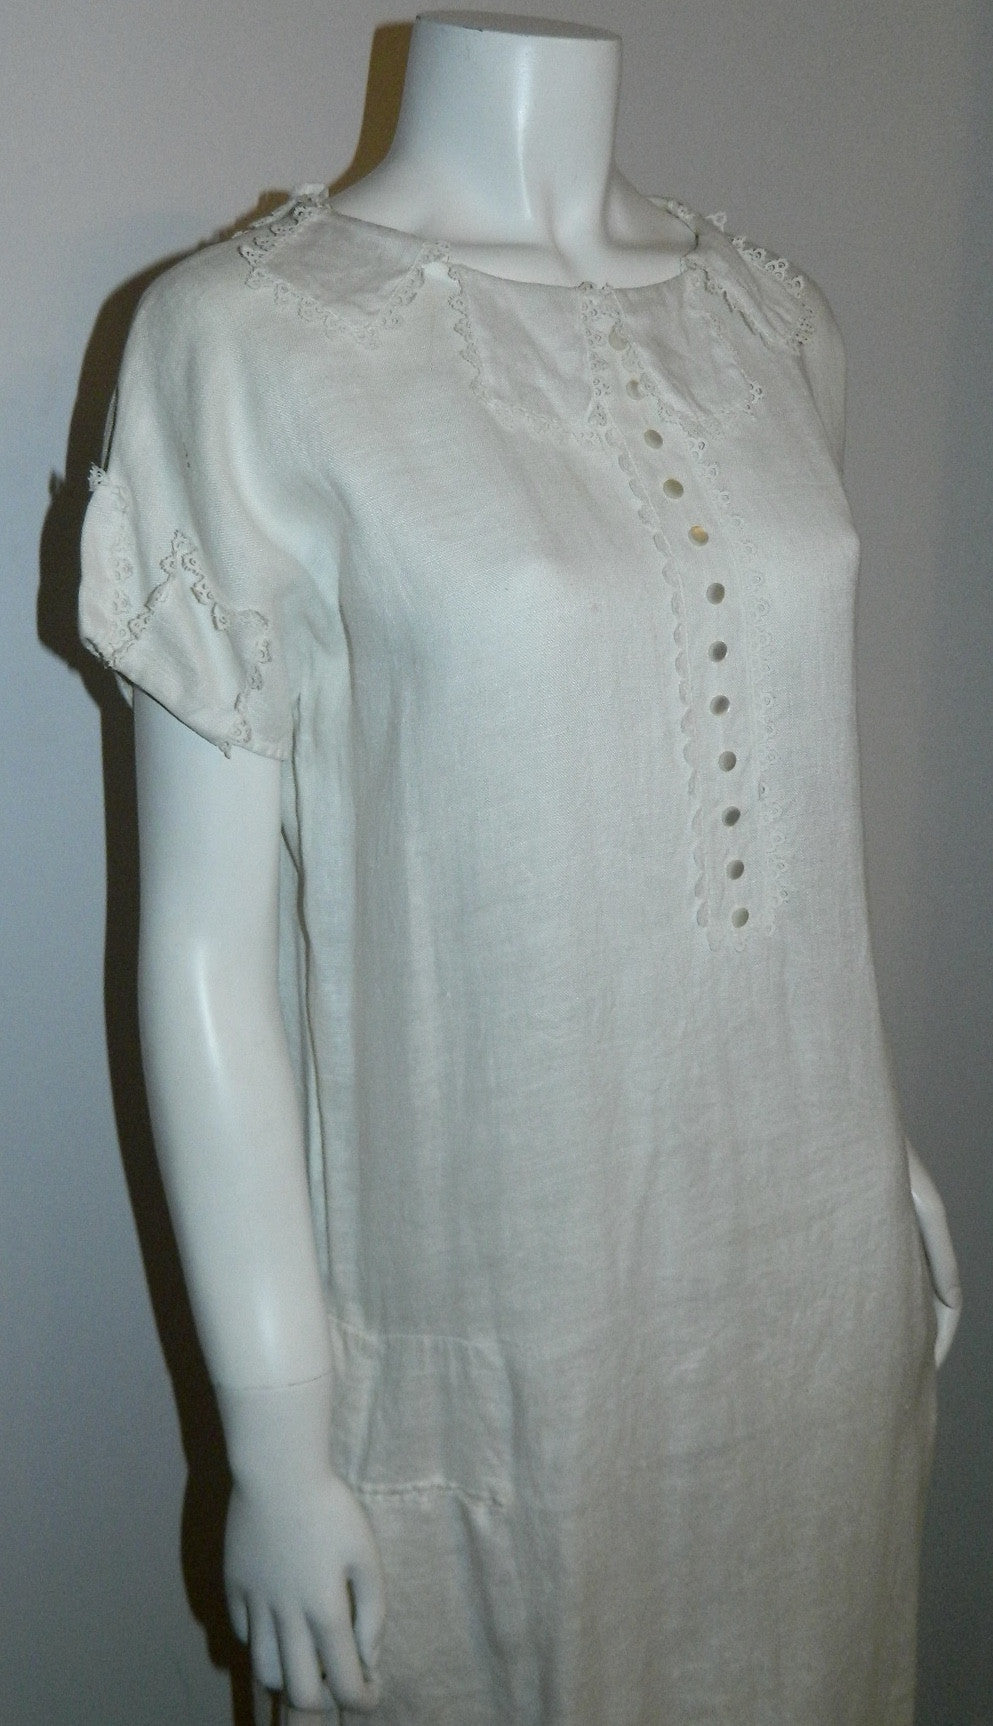 antique white linen drop waist dress 1910s 1920s vintage sporting attire